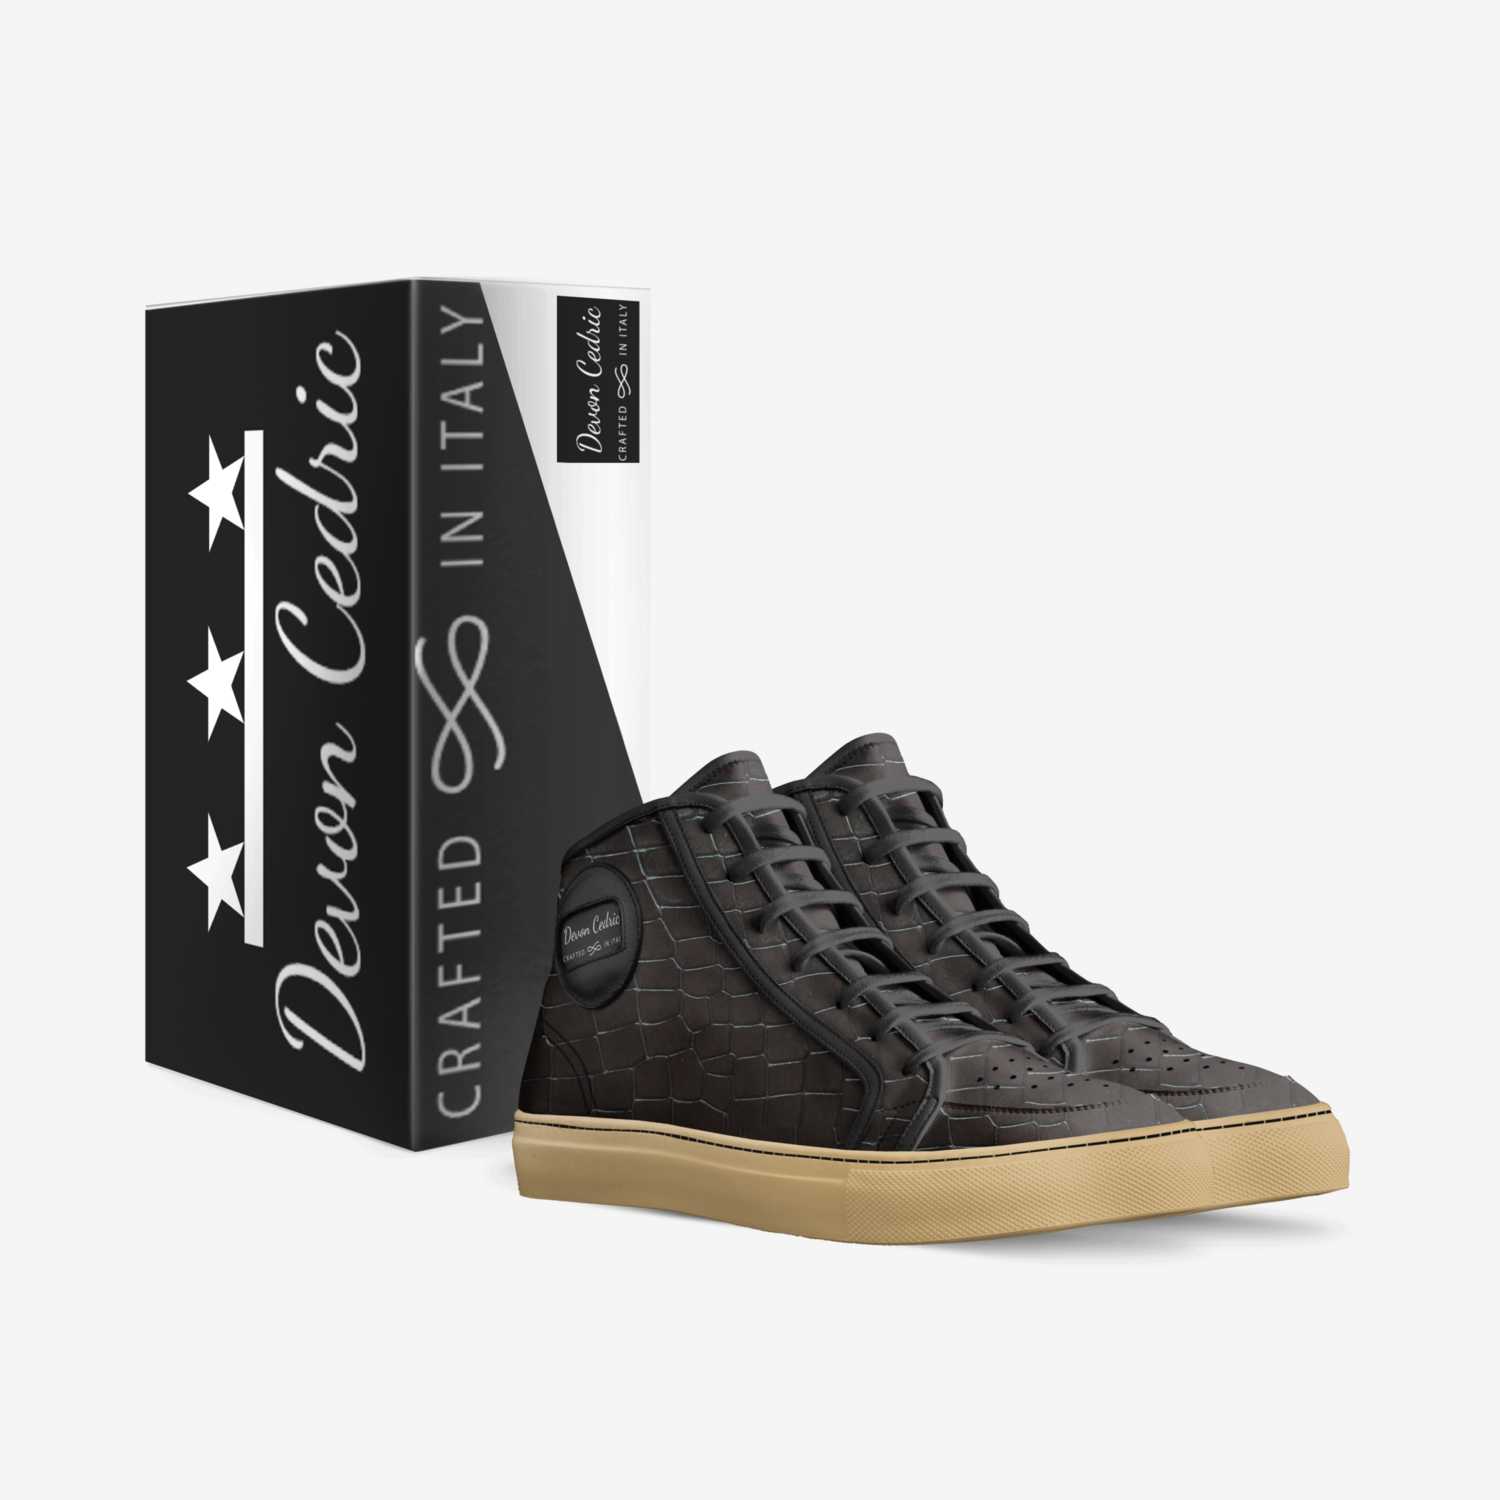 Apex Maximus custom made in Italy shoes by Devon Cedric | Box view